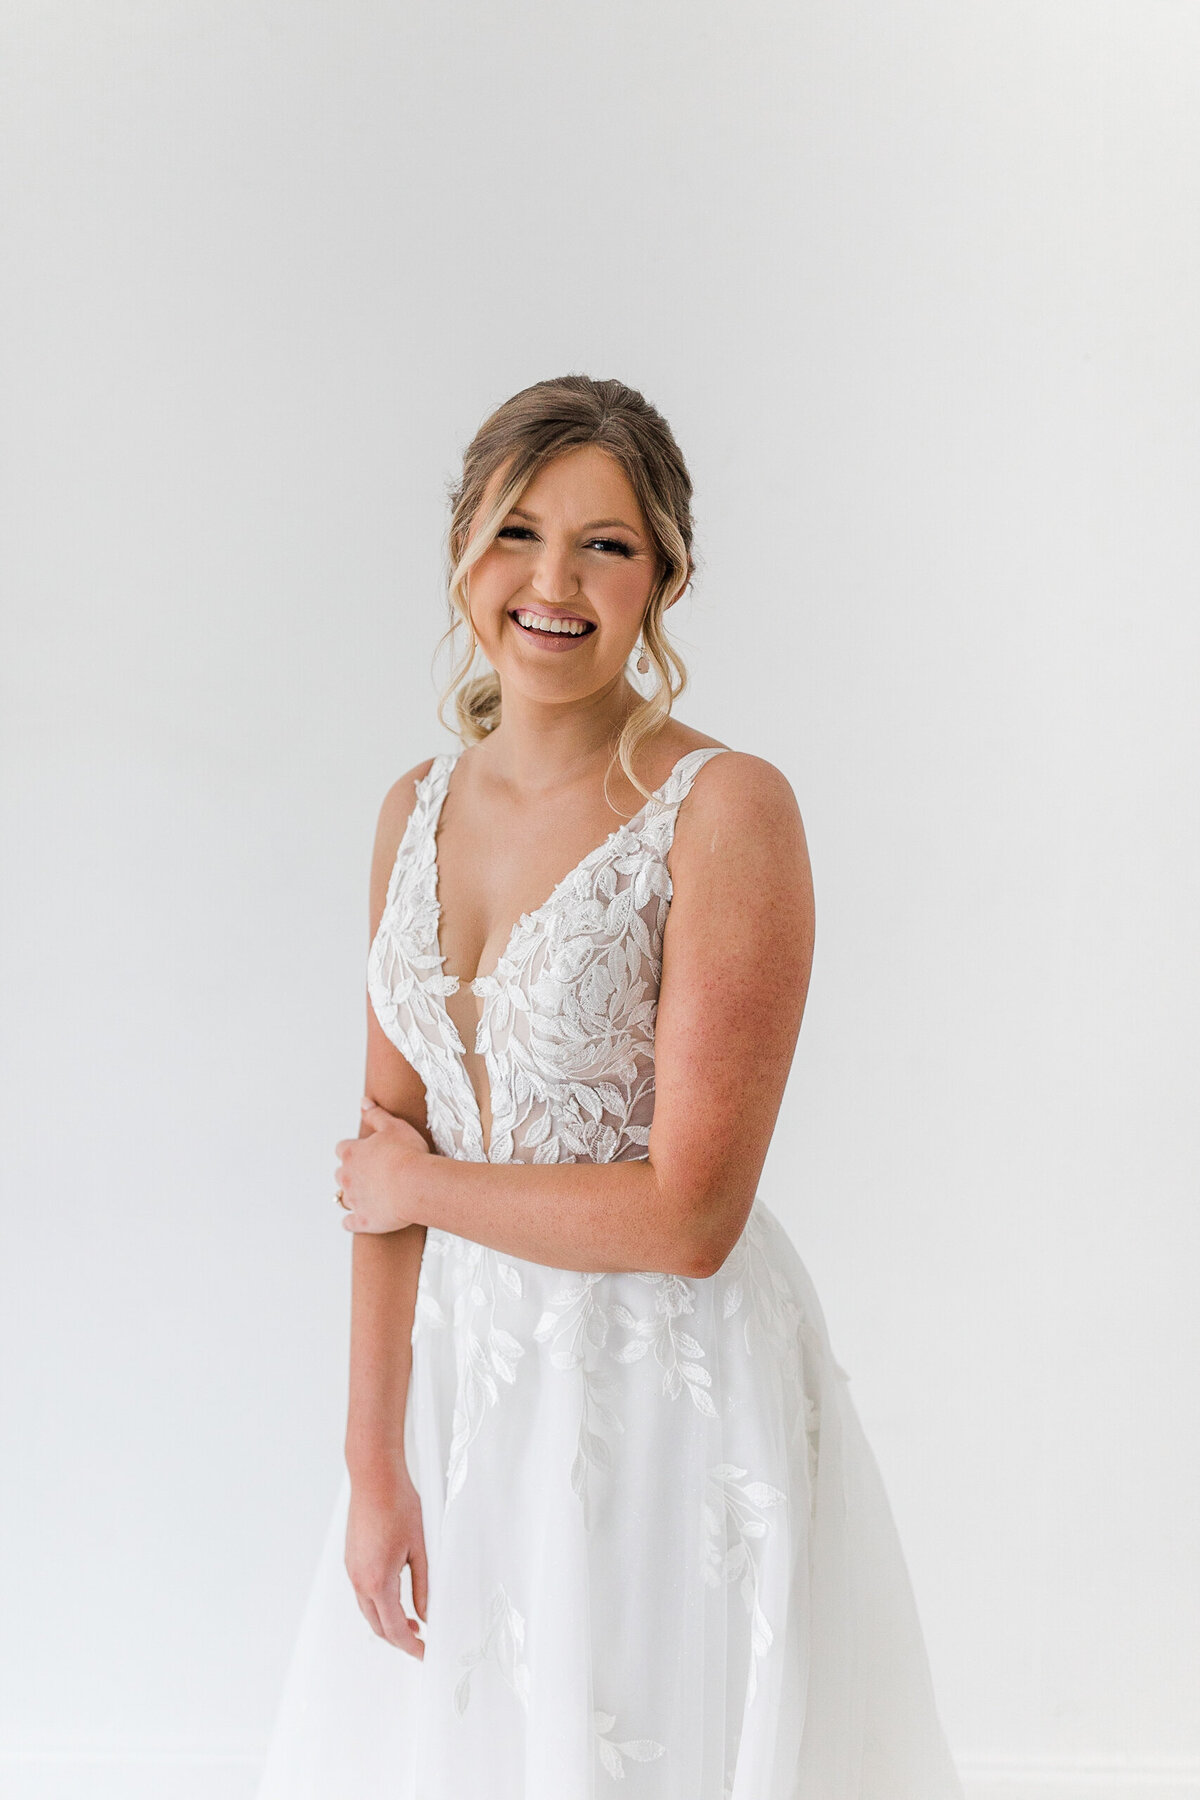 Marissa Reib Photography | Tulsa Wedding Photographer-34-2